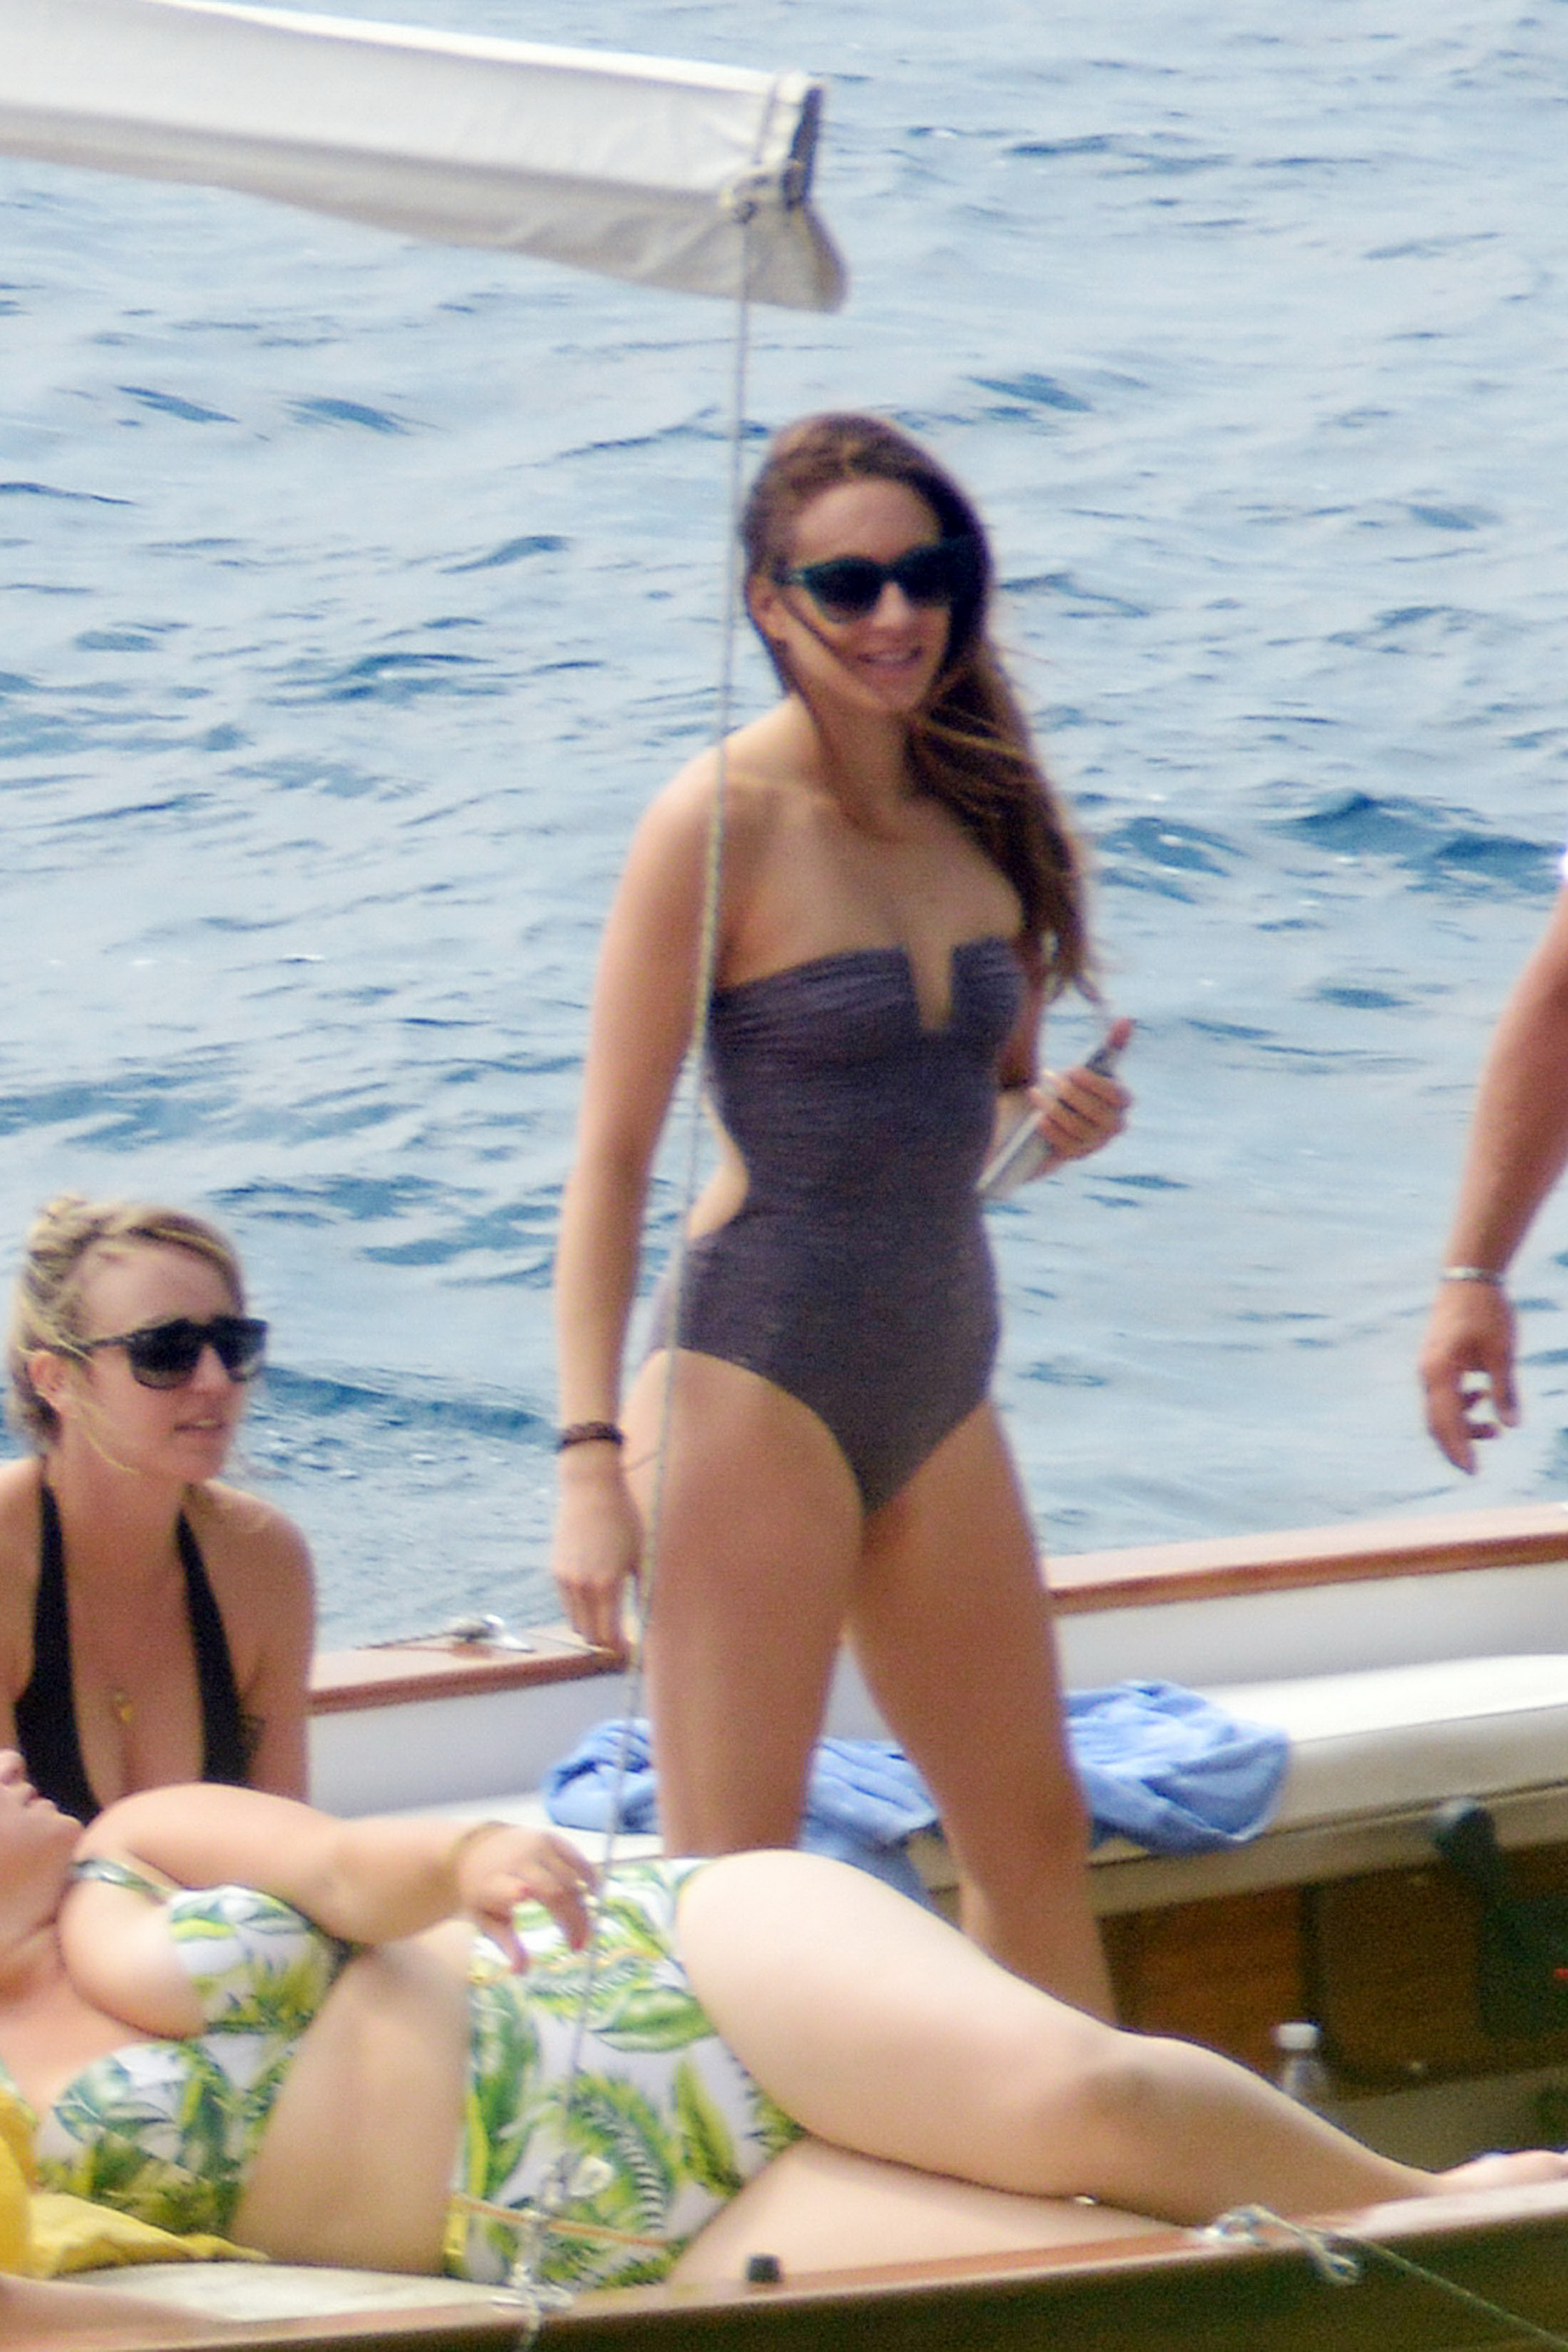 Ashley Benson, Shay Mitchell & Troian Bellisario sexy bikinis and swimsuits candids on the yacht in Capri 37x HQ photos 24.jpg